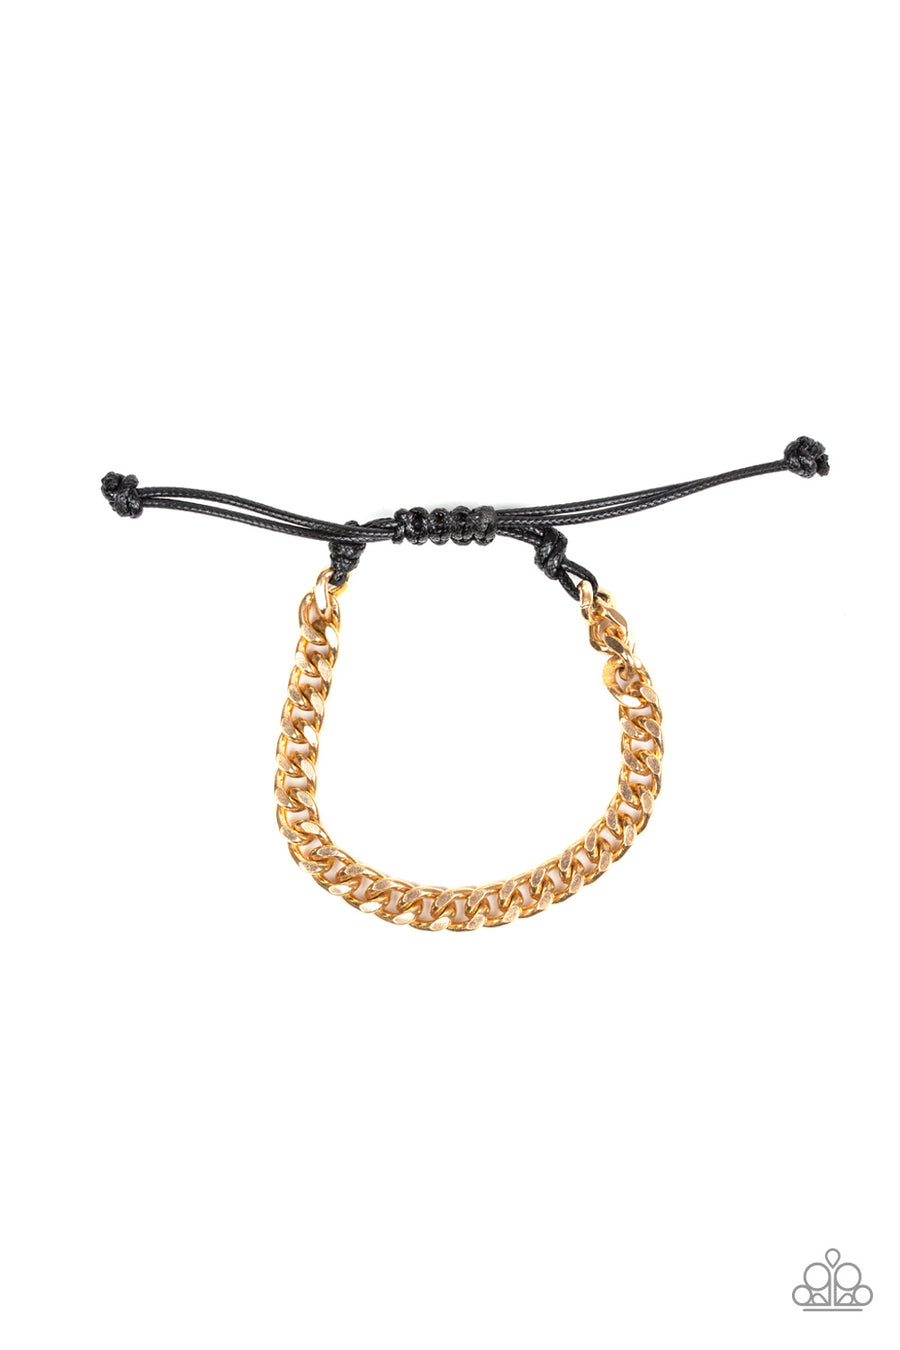 Rule Breaker- Gold Cable Chain Urban Bracelet- Paparazzi Accessories